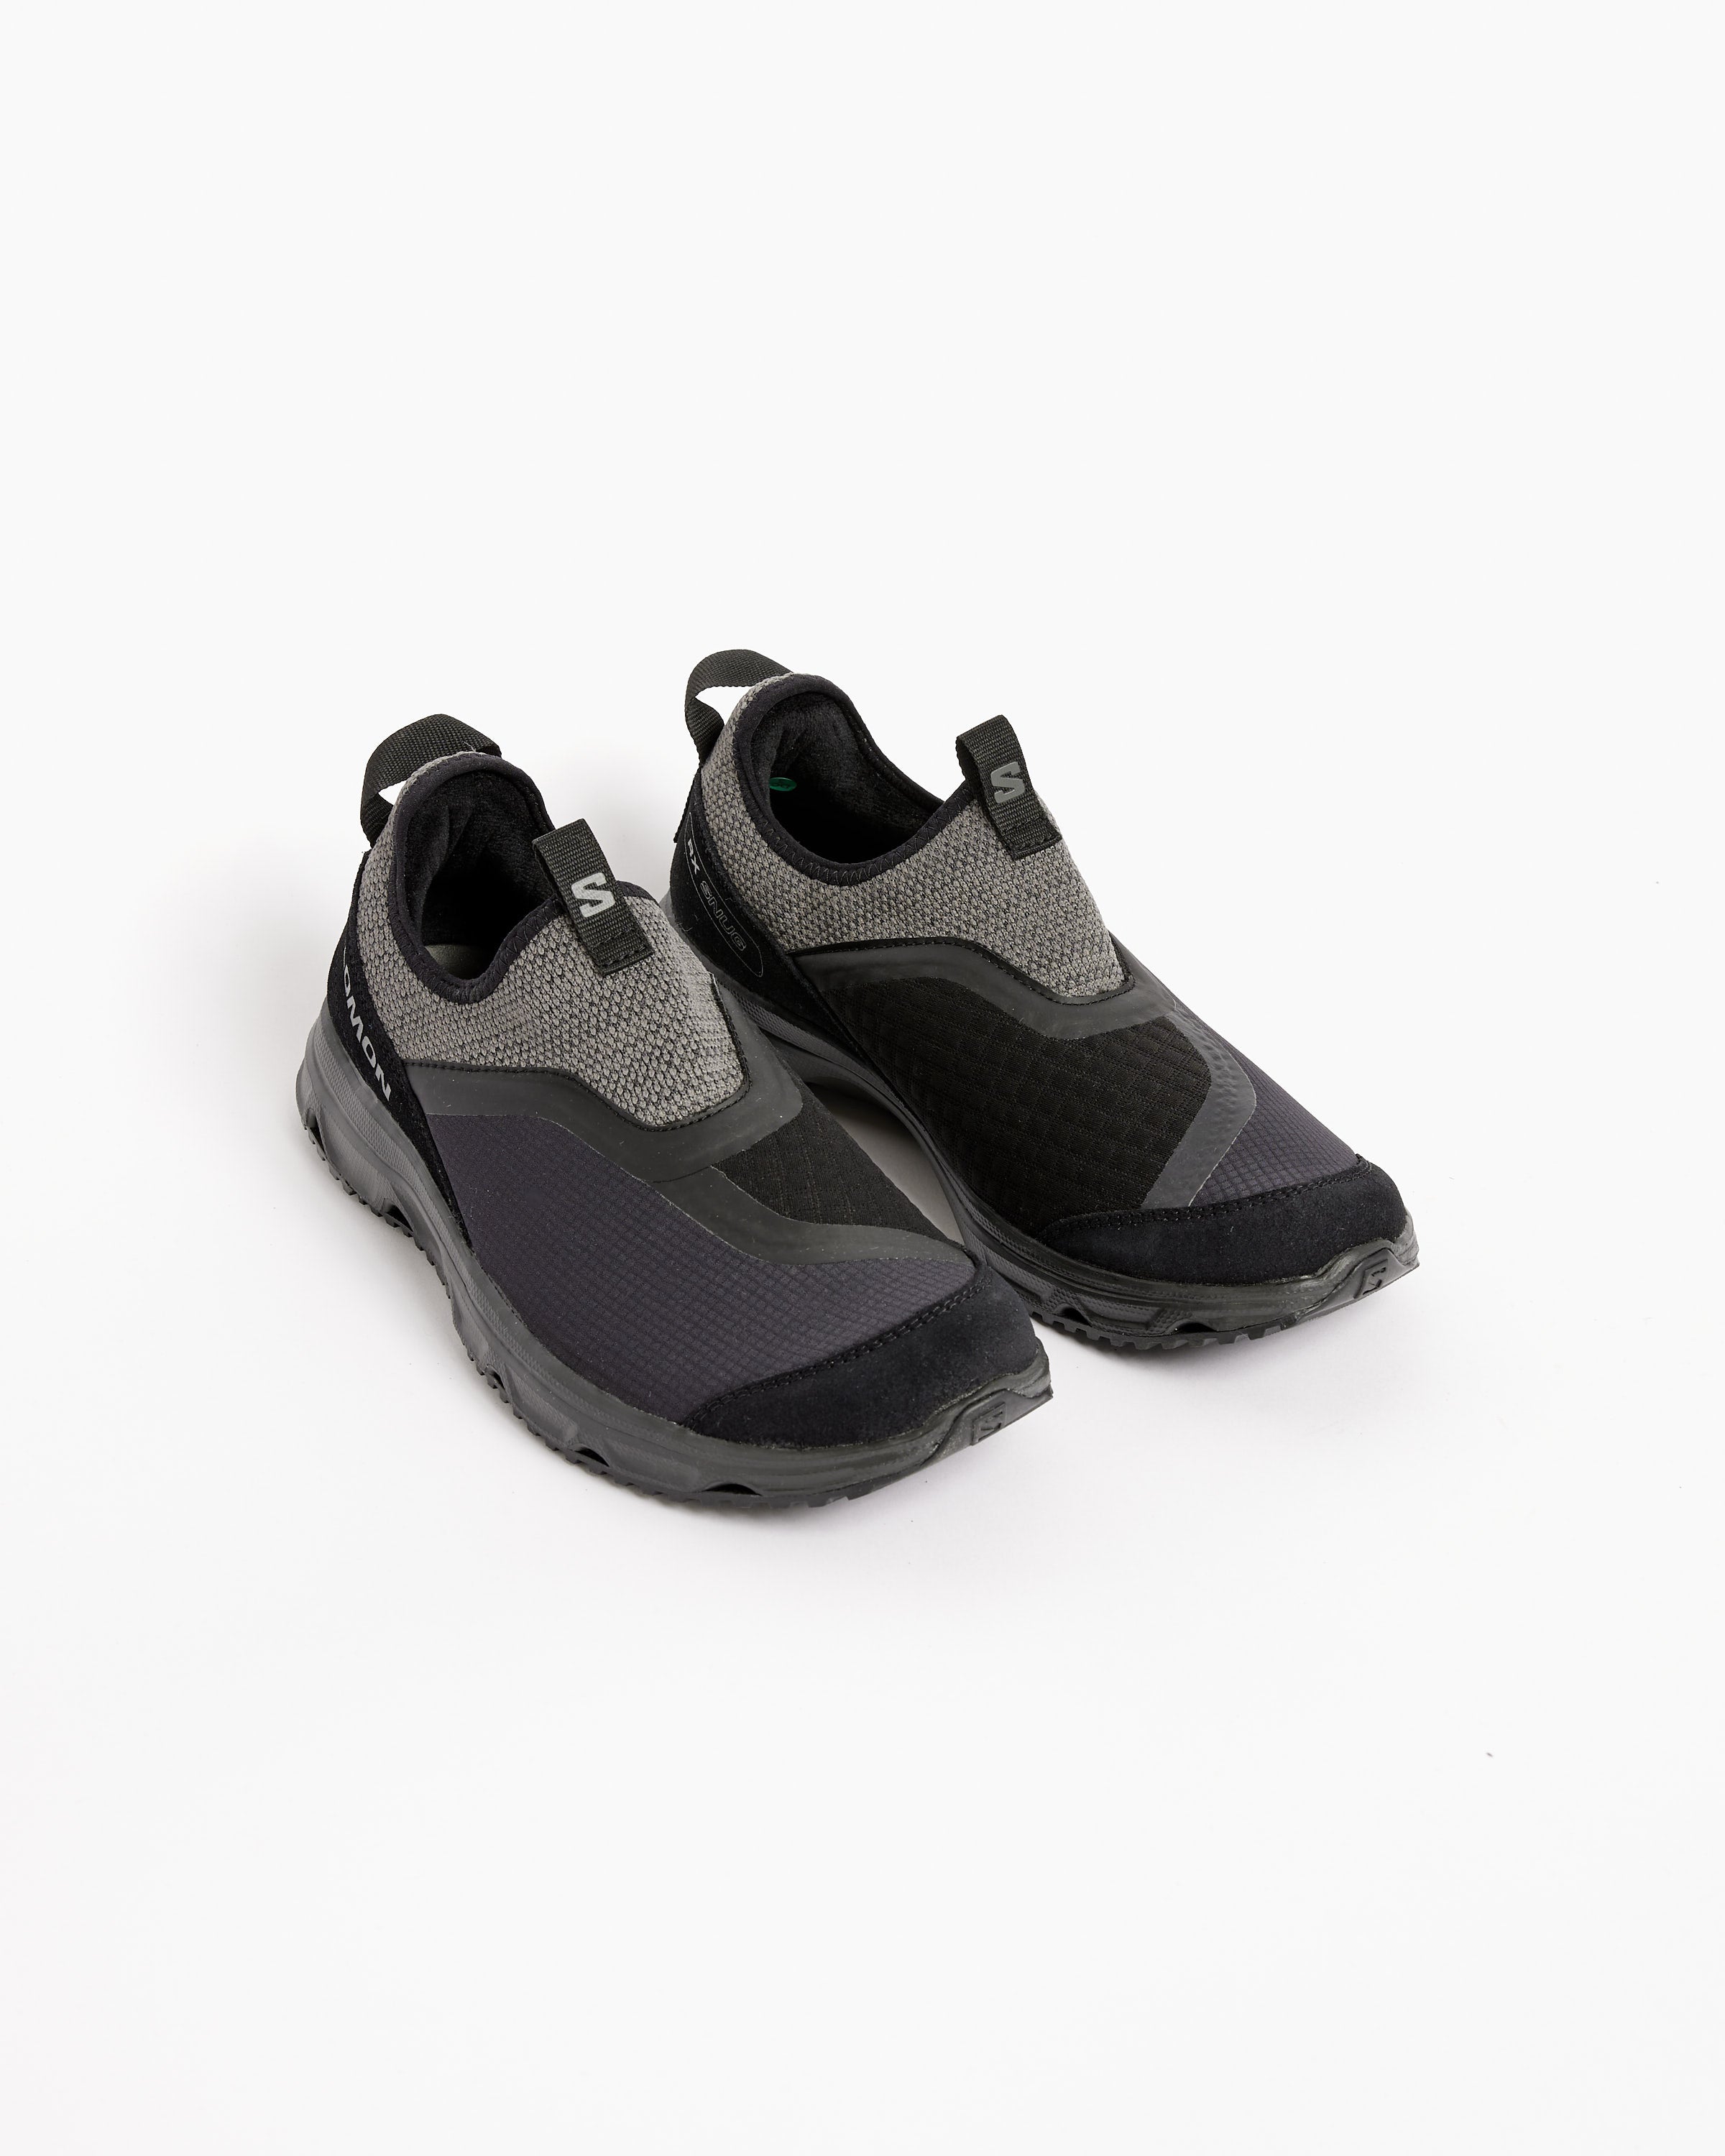 RX Snug Shoe in Black/Black/Magnet in Moss Grey/Castor Grey/Peat in RX Snug  Shoe